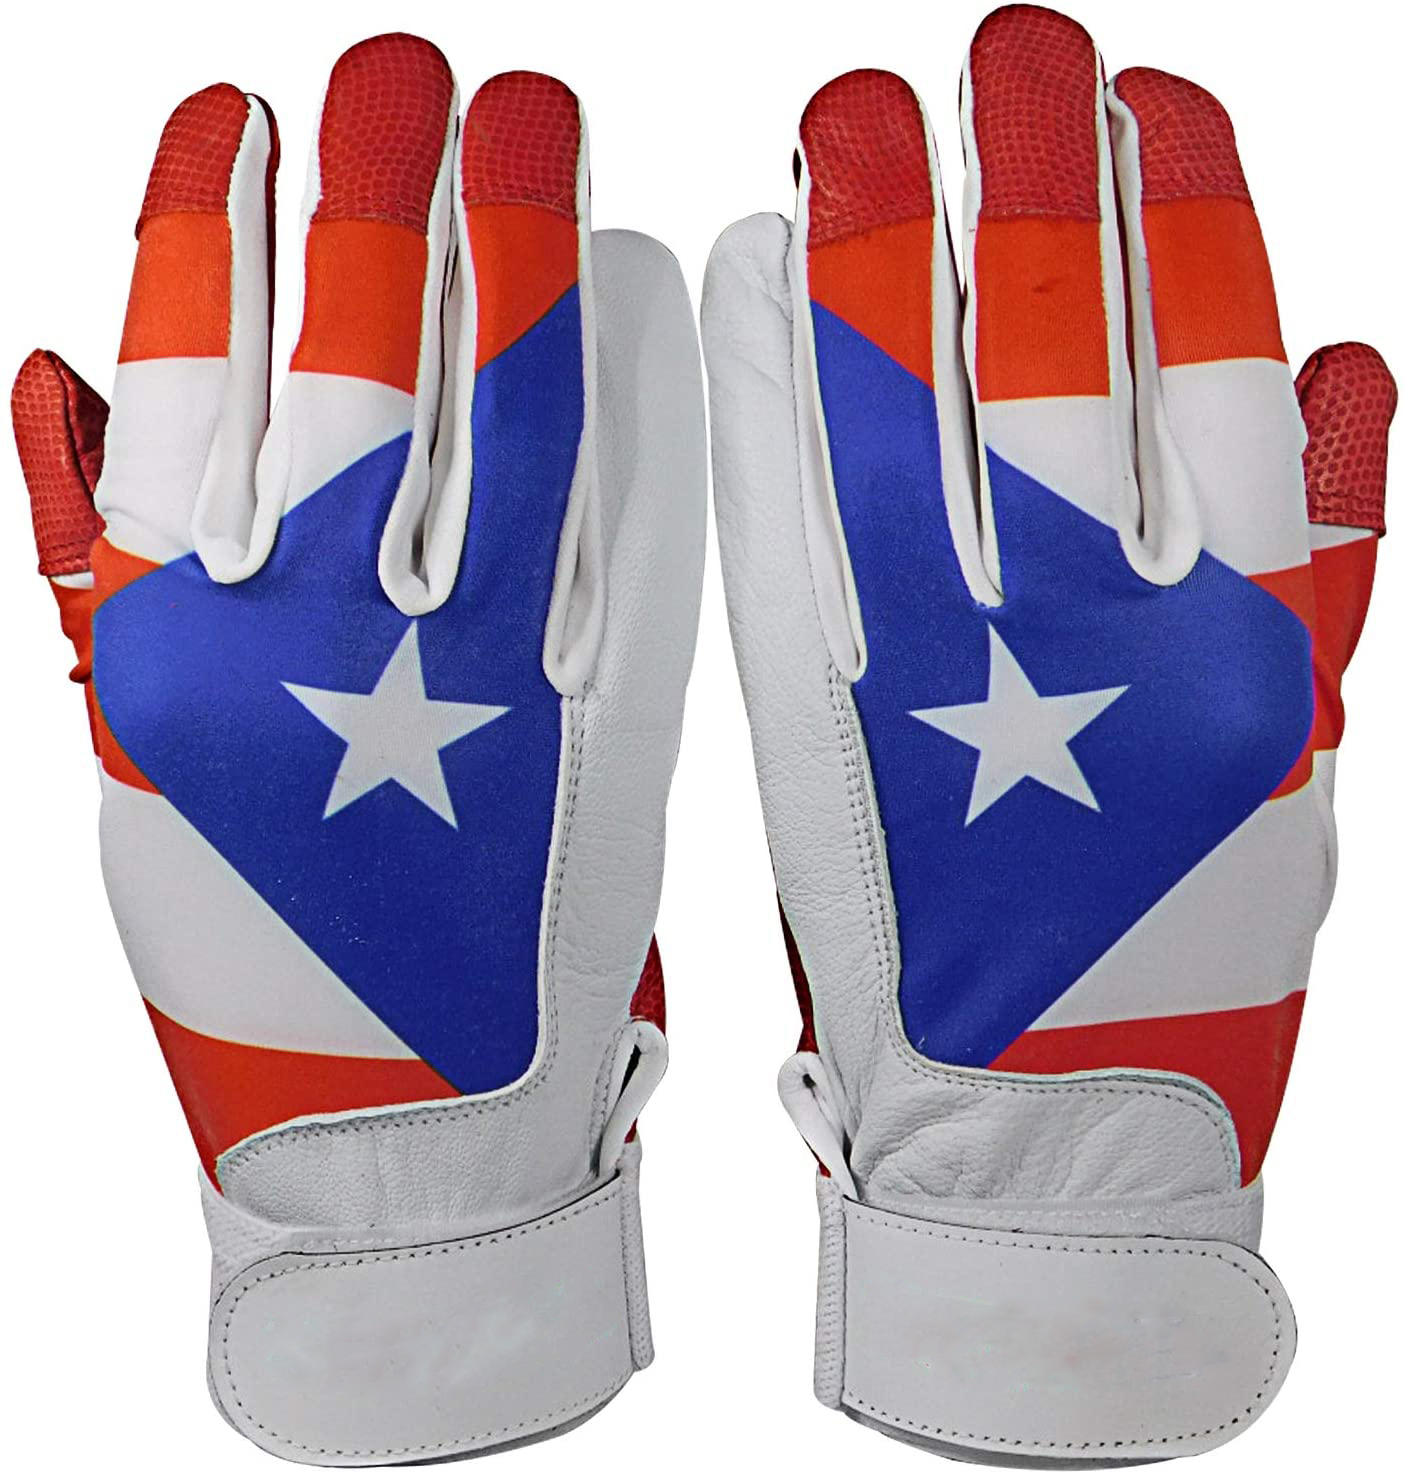 Baseball batting gloves soft leather custom logo promotion digital printing design